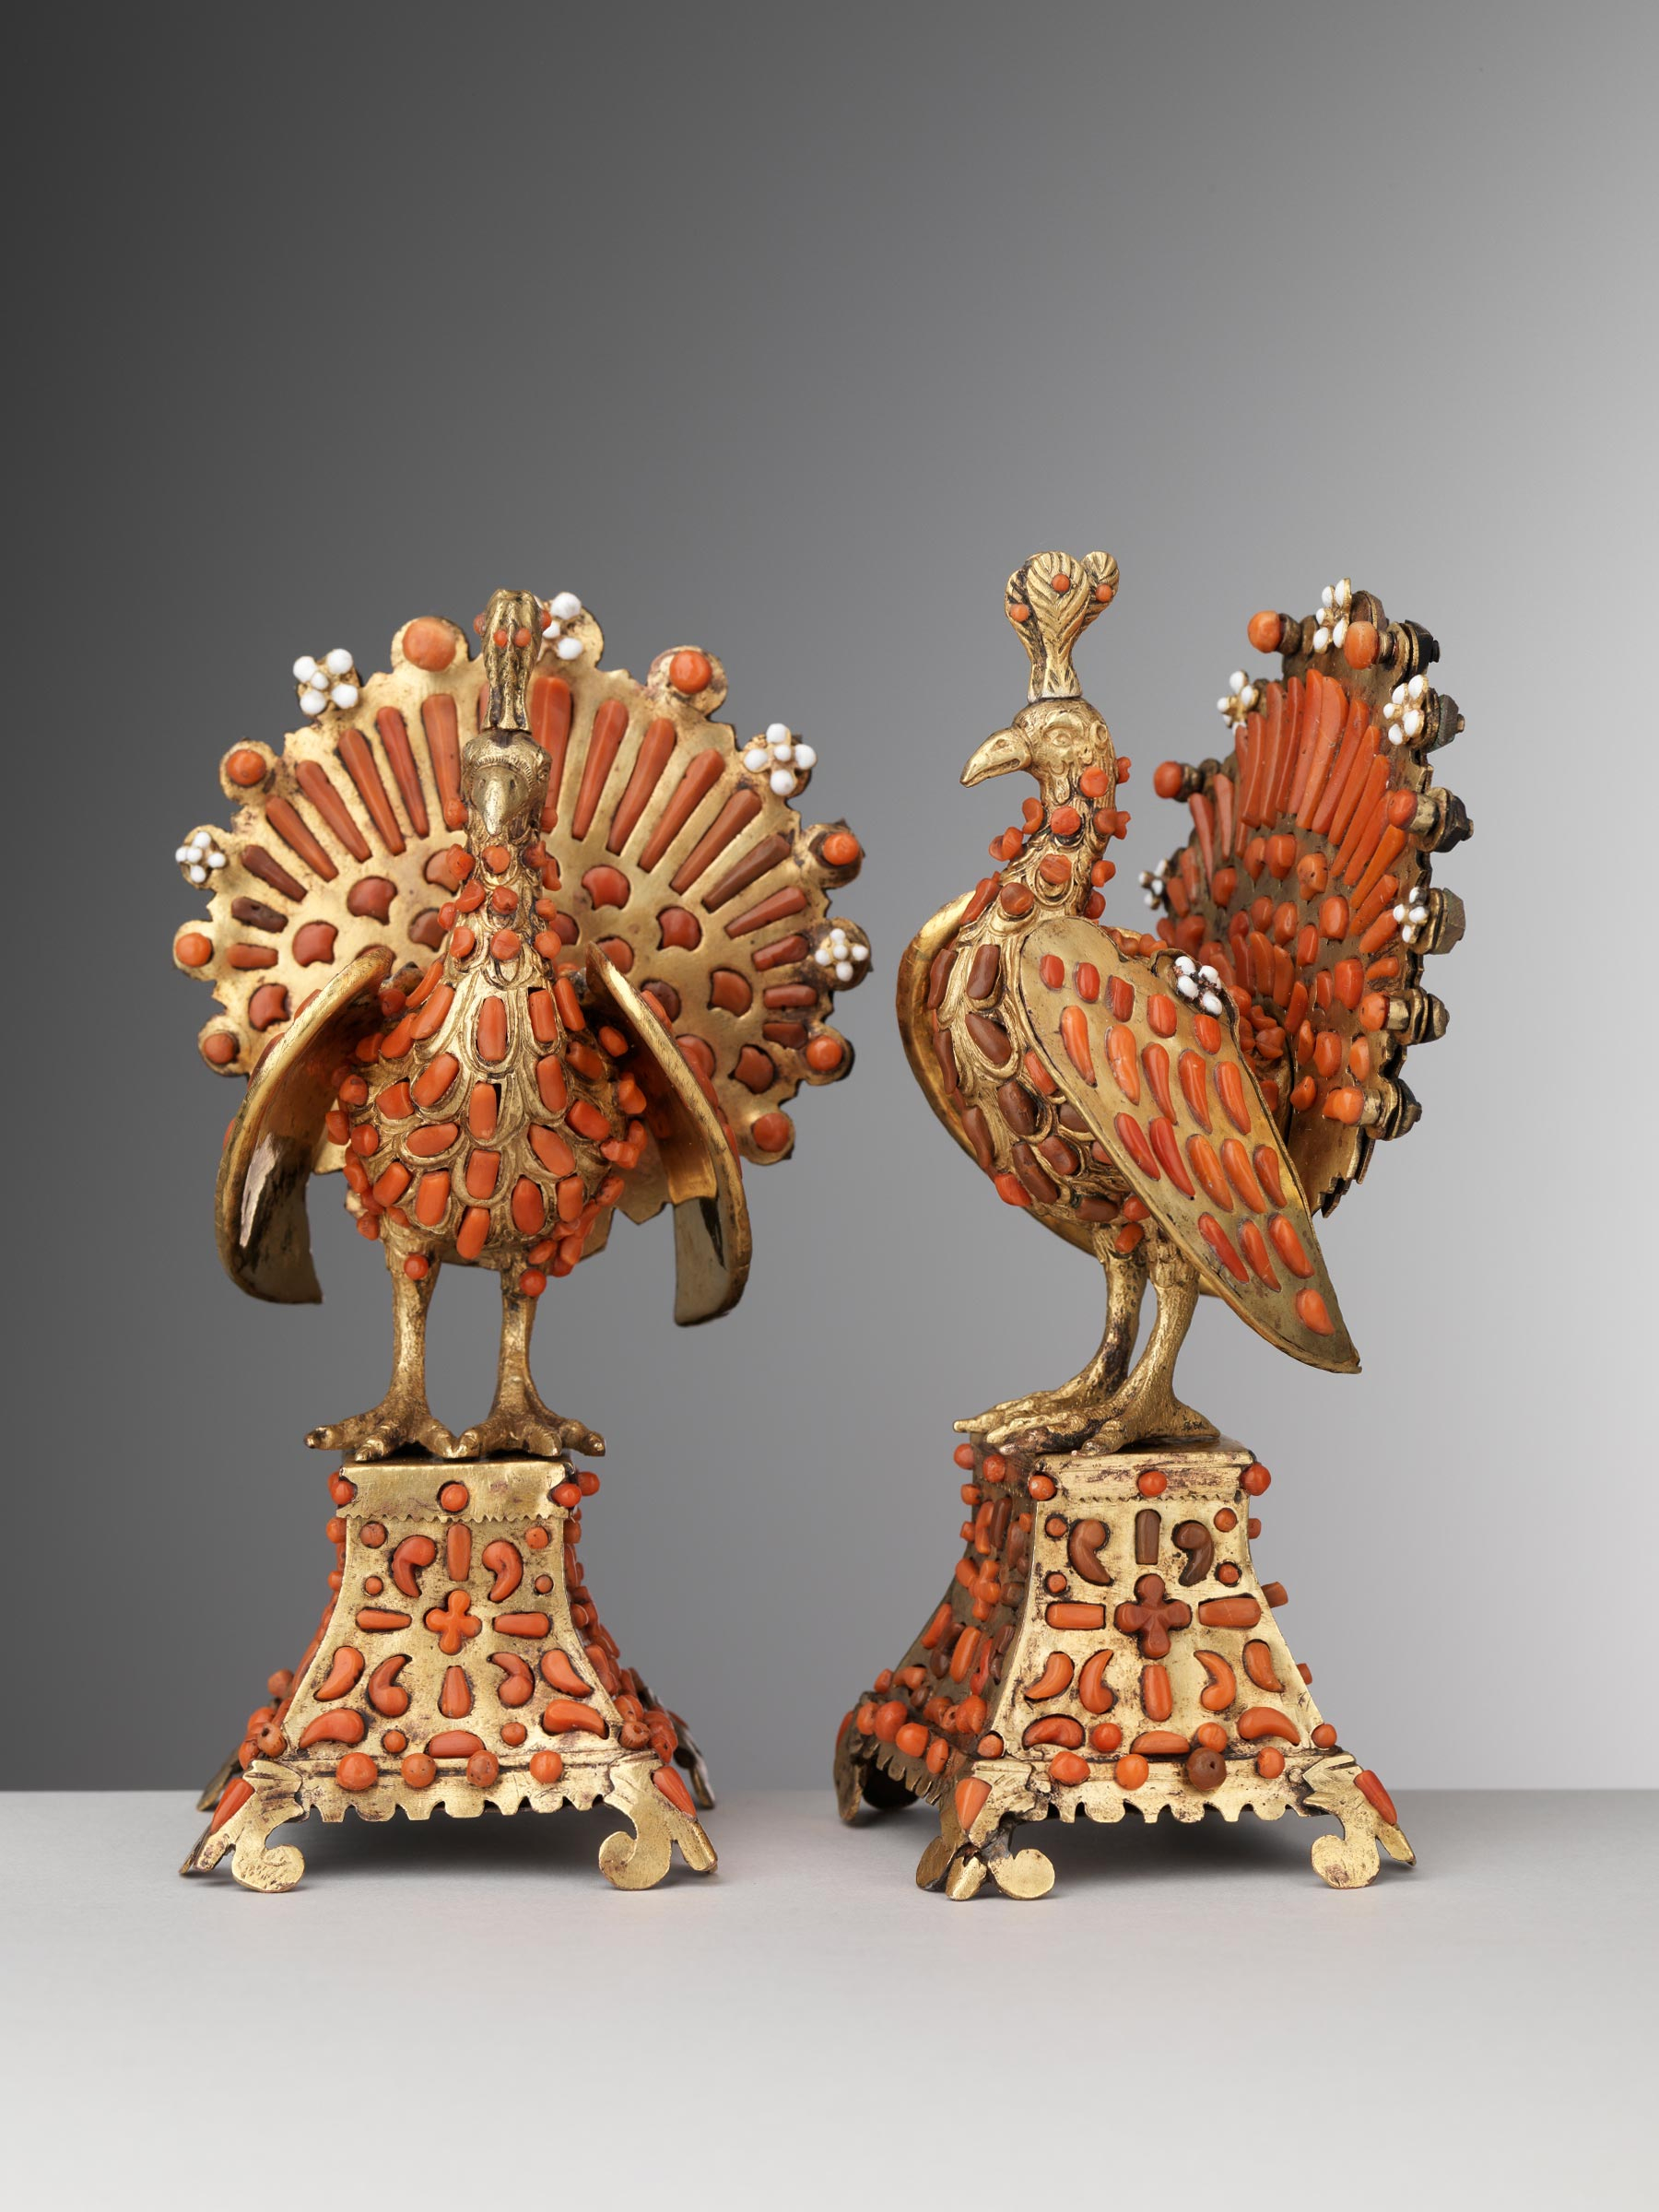 Trapani coral workshops - Pair of peacocks